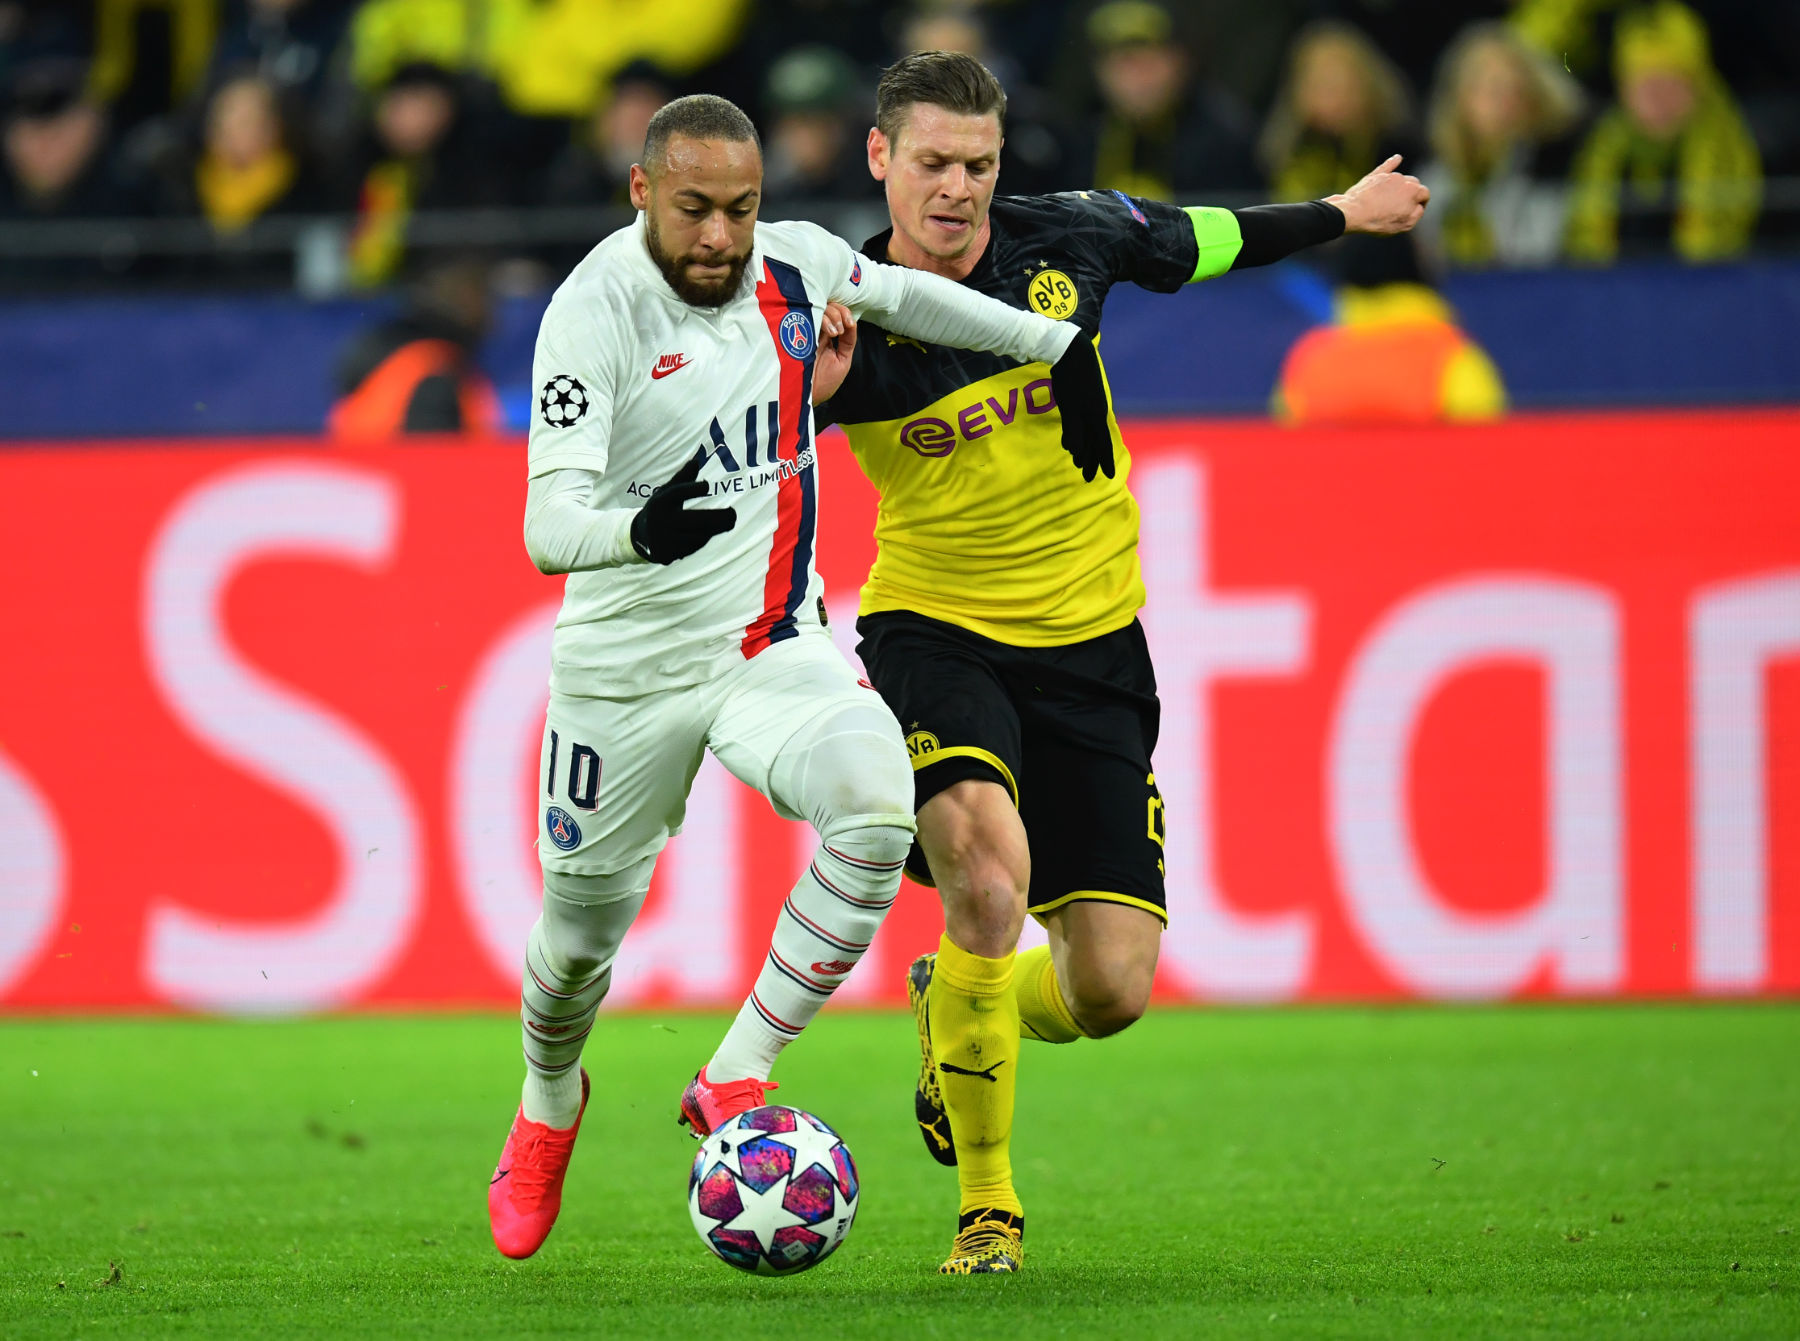 Officiel : PSG- Borussia Dortmund à huis clos !